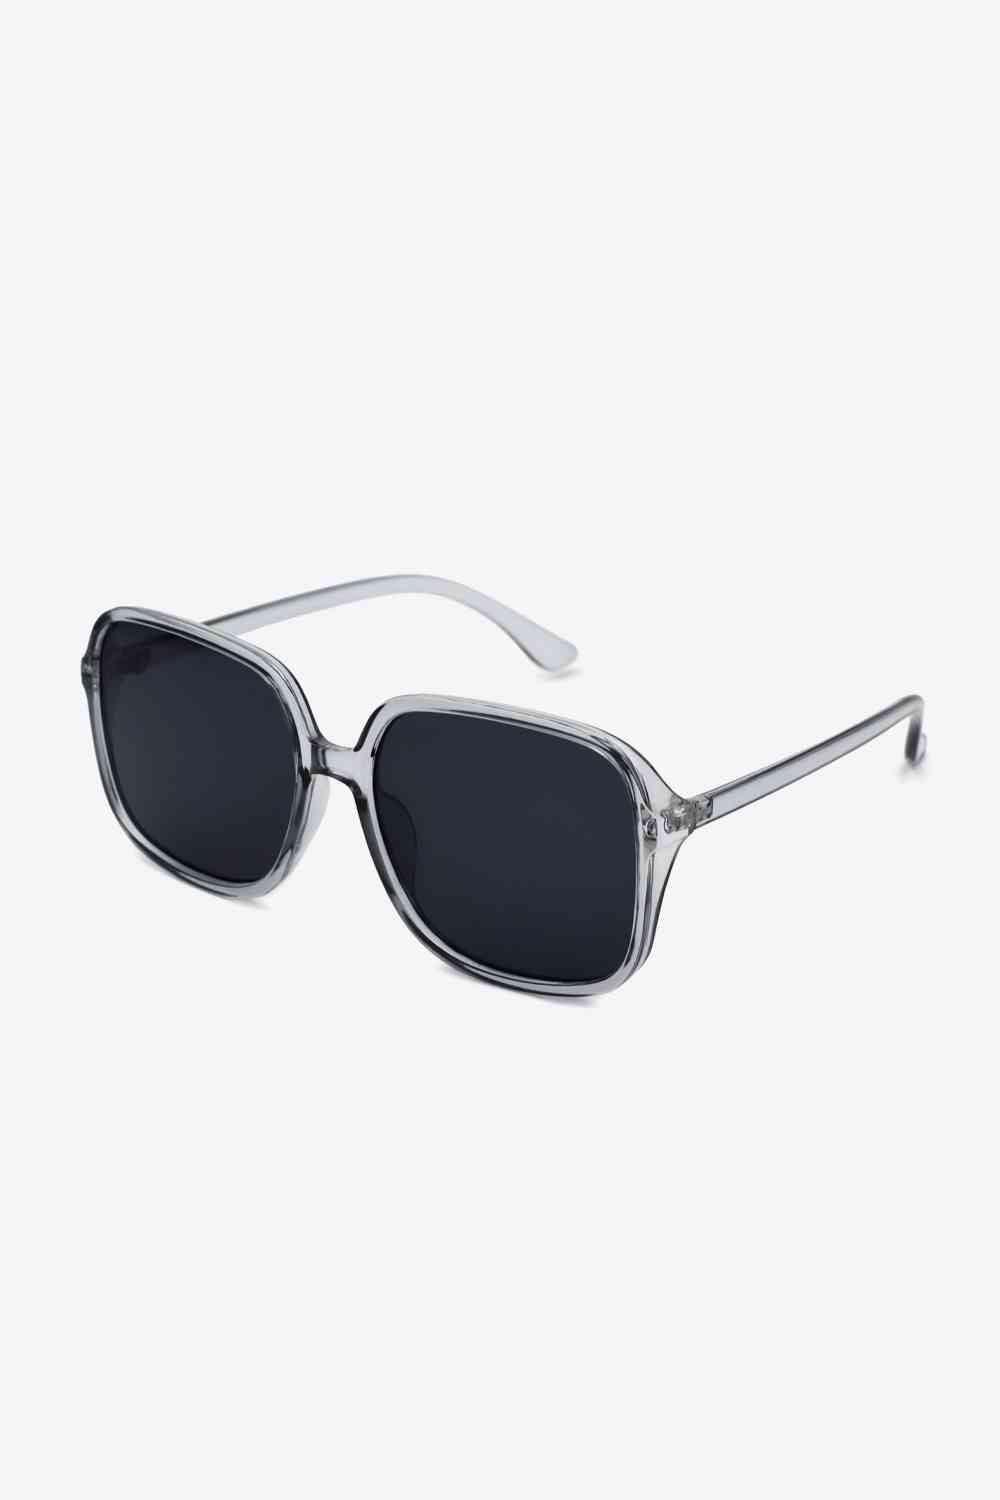 TEEK - Simply Square Style Sunglasses EYEGLASSES TEEK Trend   